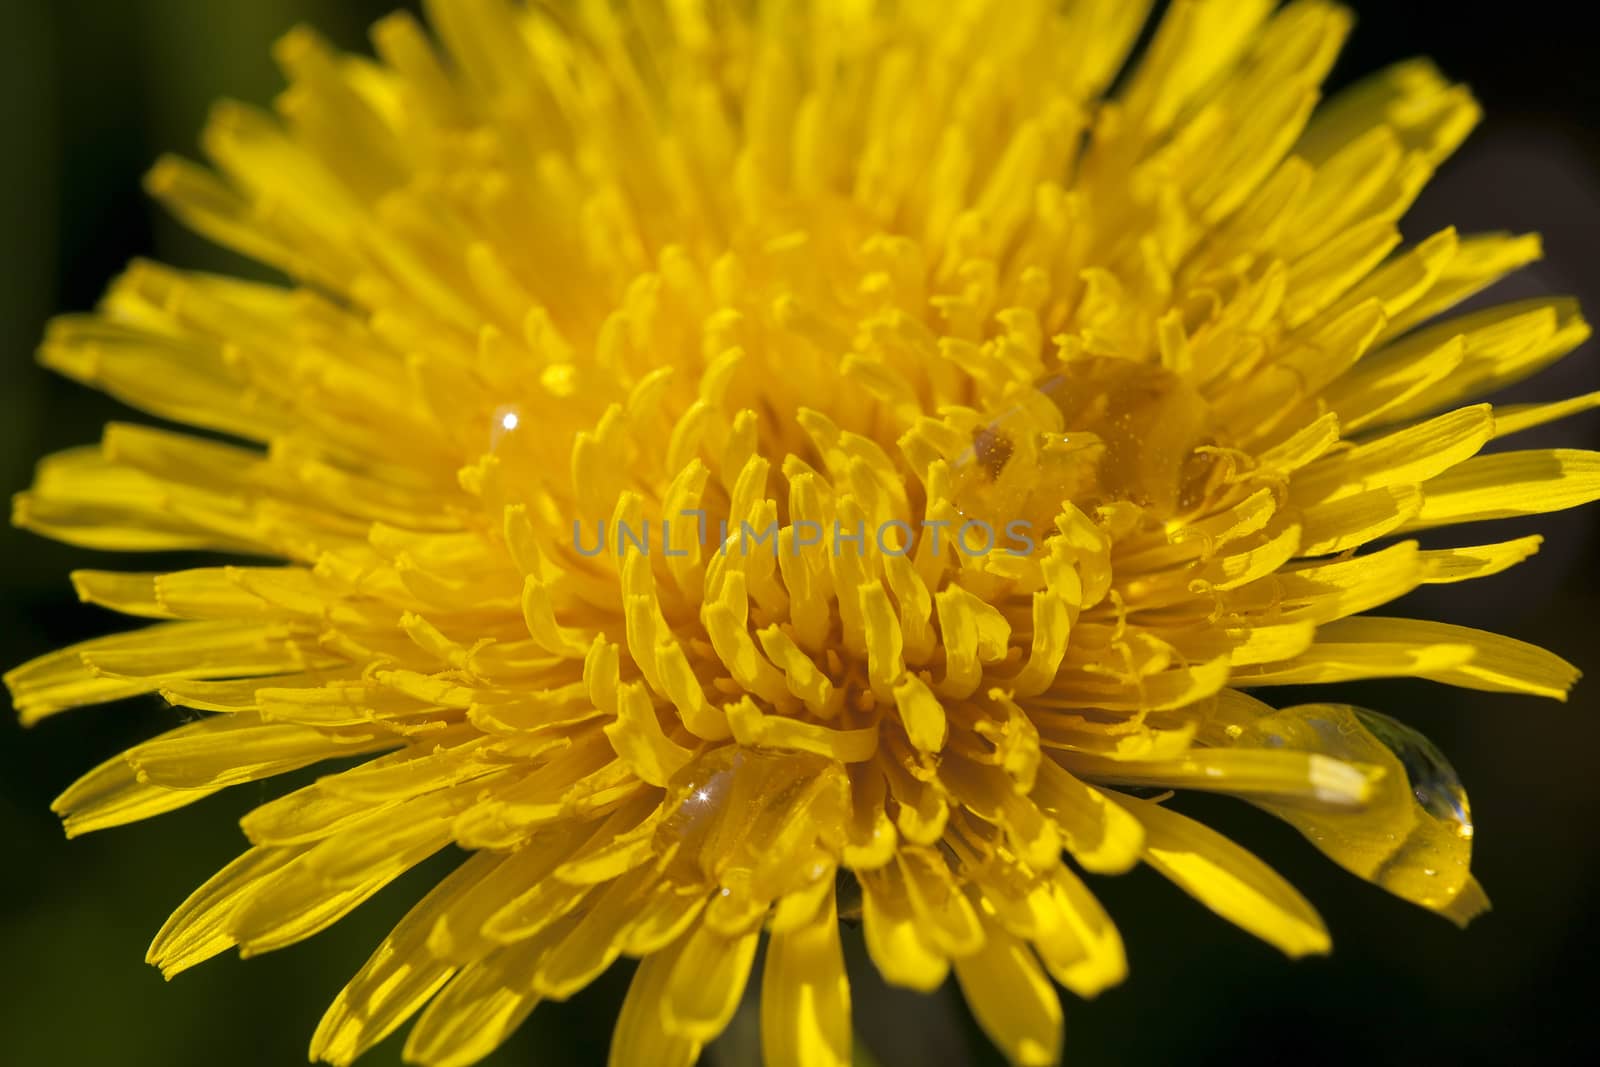 yellow dandelions in spring by avq